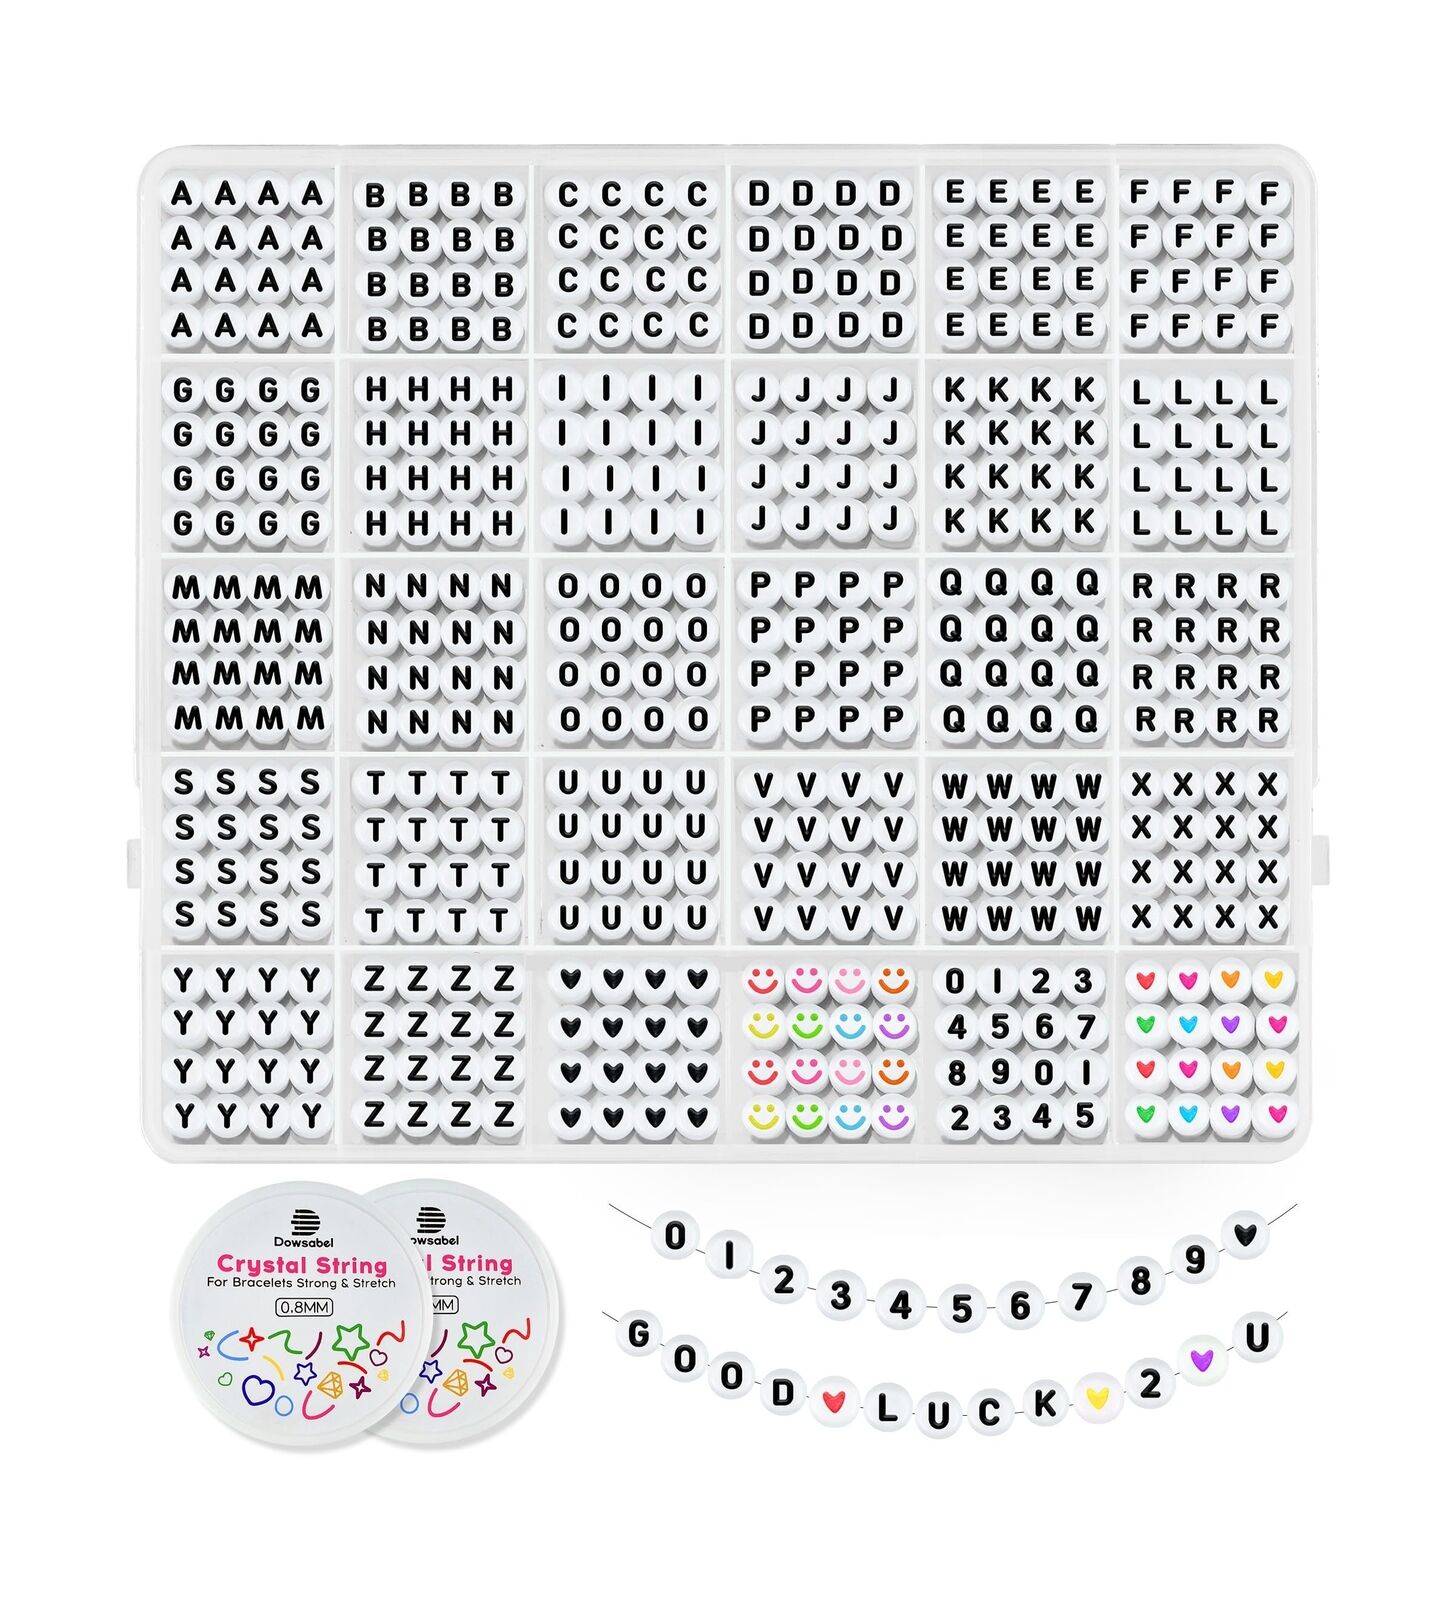 Dowsabel 1520 PCS Letter Beads, 30 Styles Friendship Bracelet Kit, 4x7mm Roun...